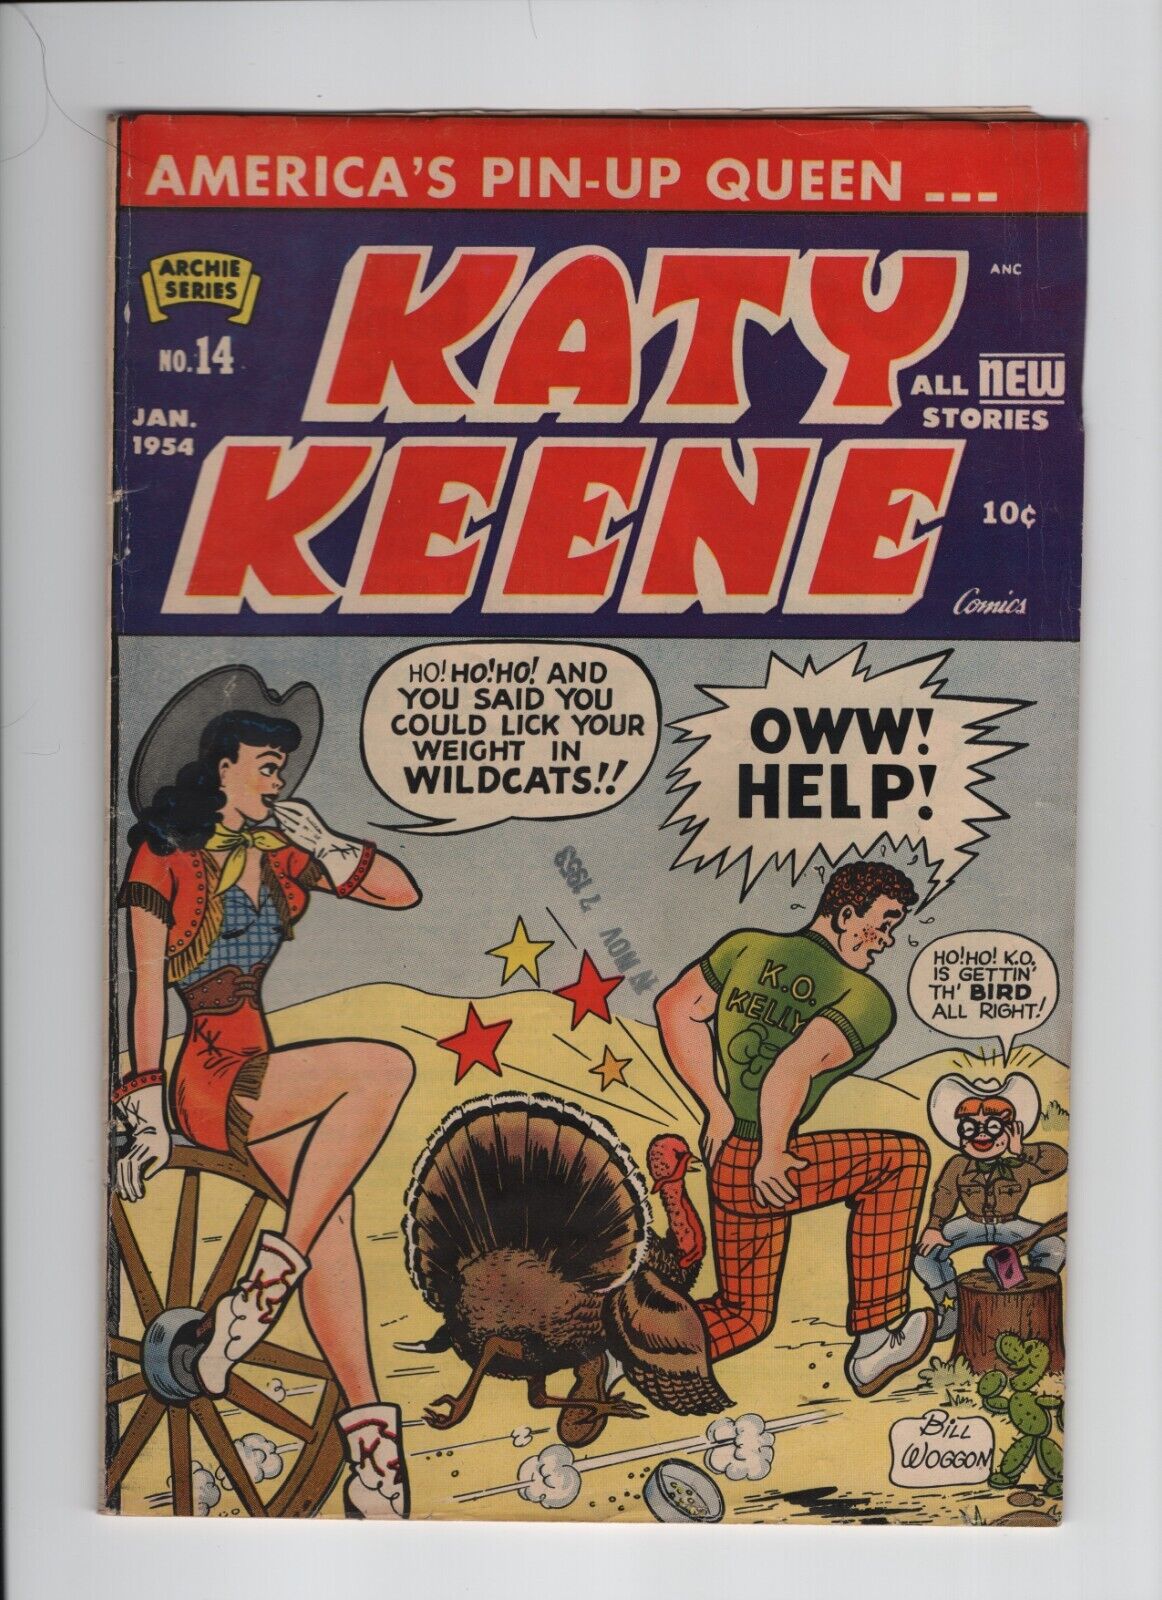 Katy Keene 14 VG 4.0 Archie Comics GGA No Cut-Outs 1954